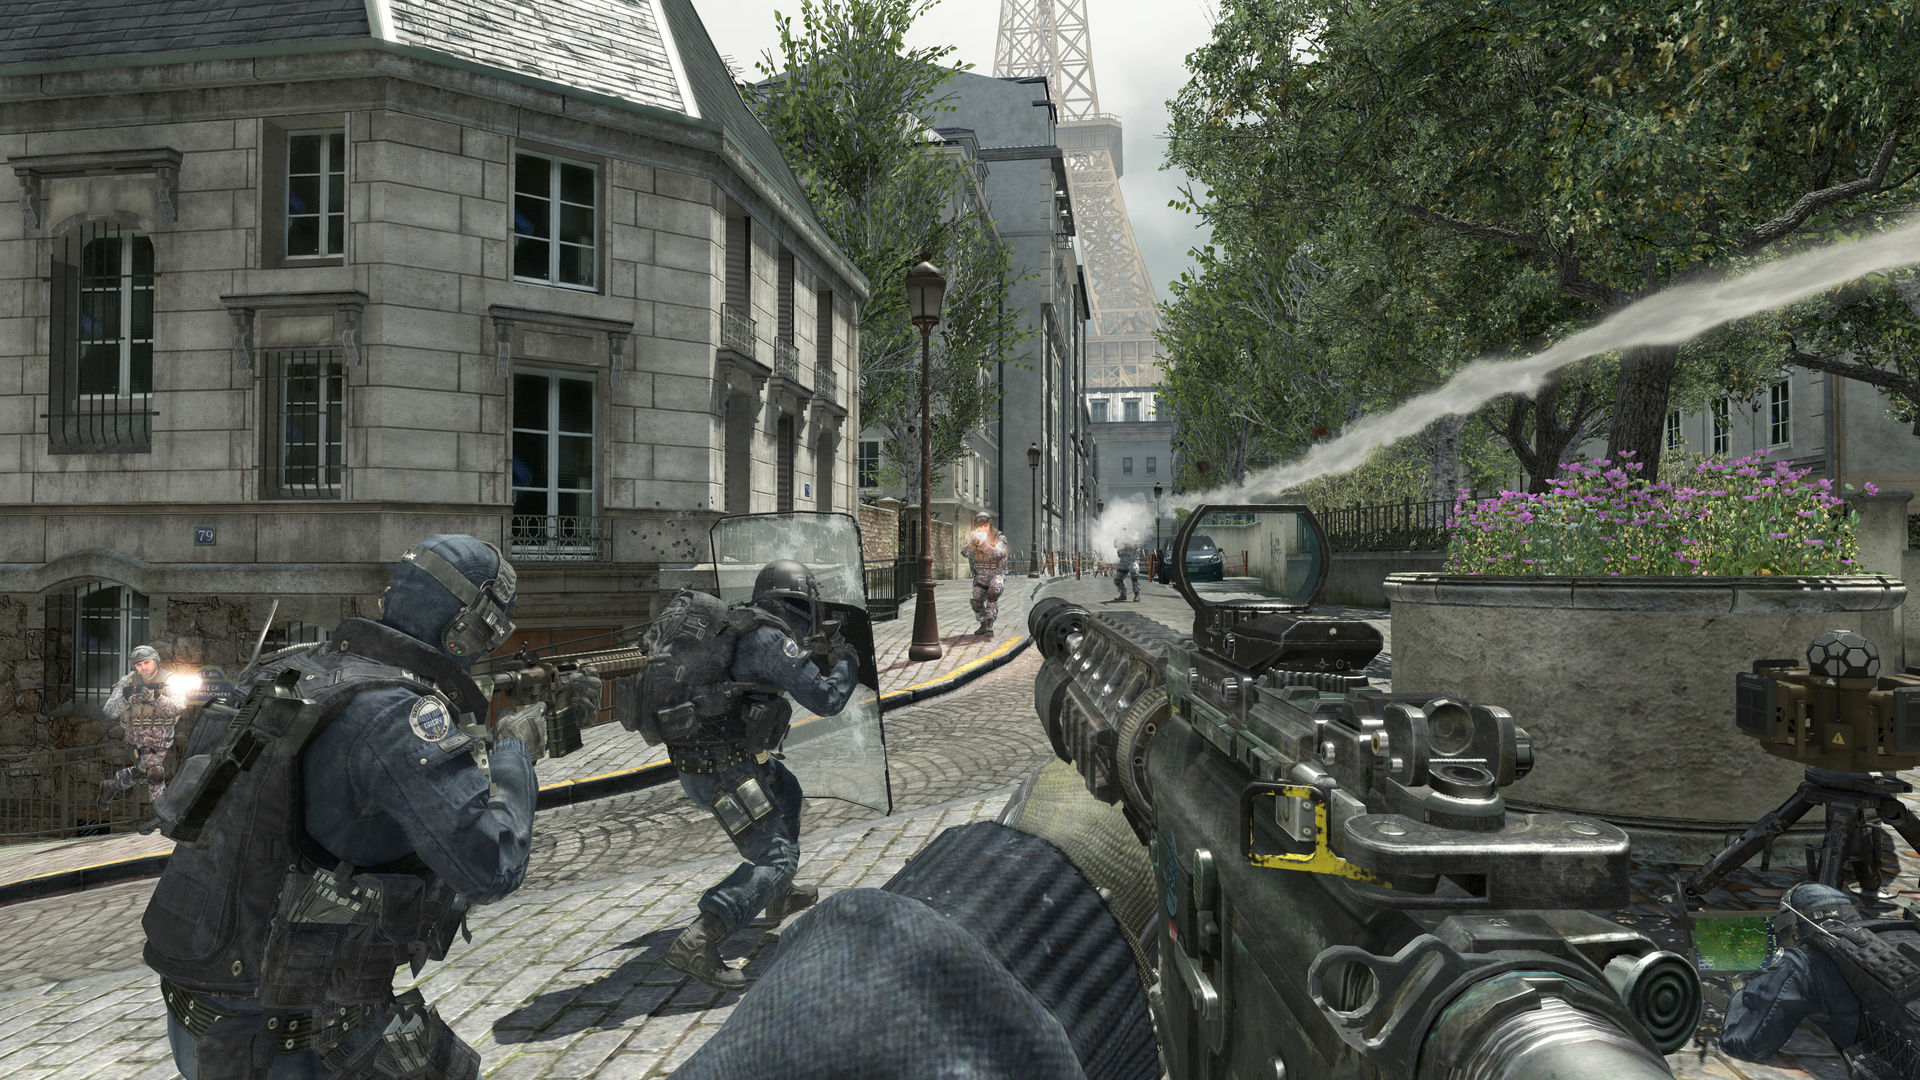 Call Of Duty Modern Warfare 3 On Steam